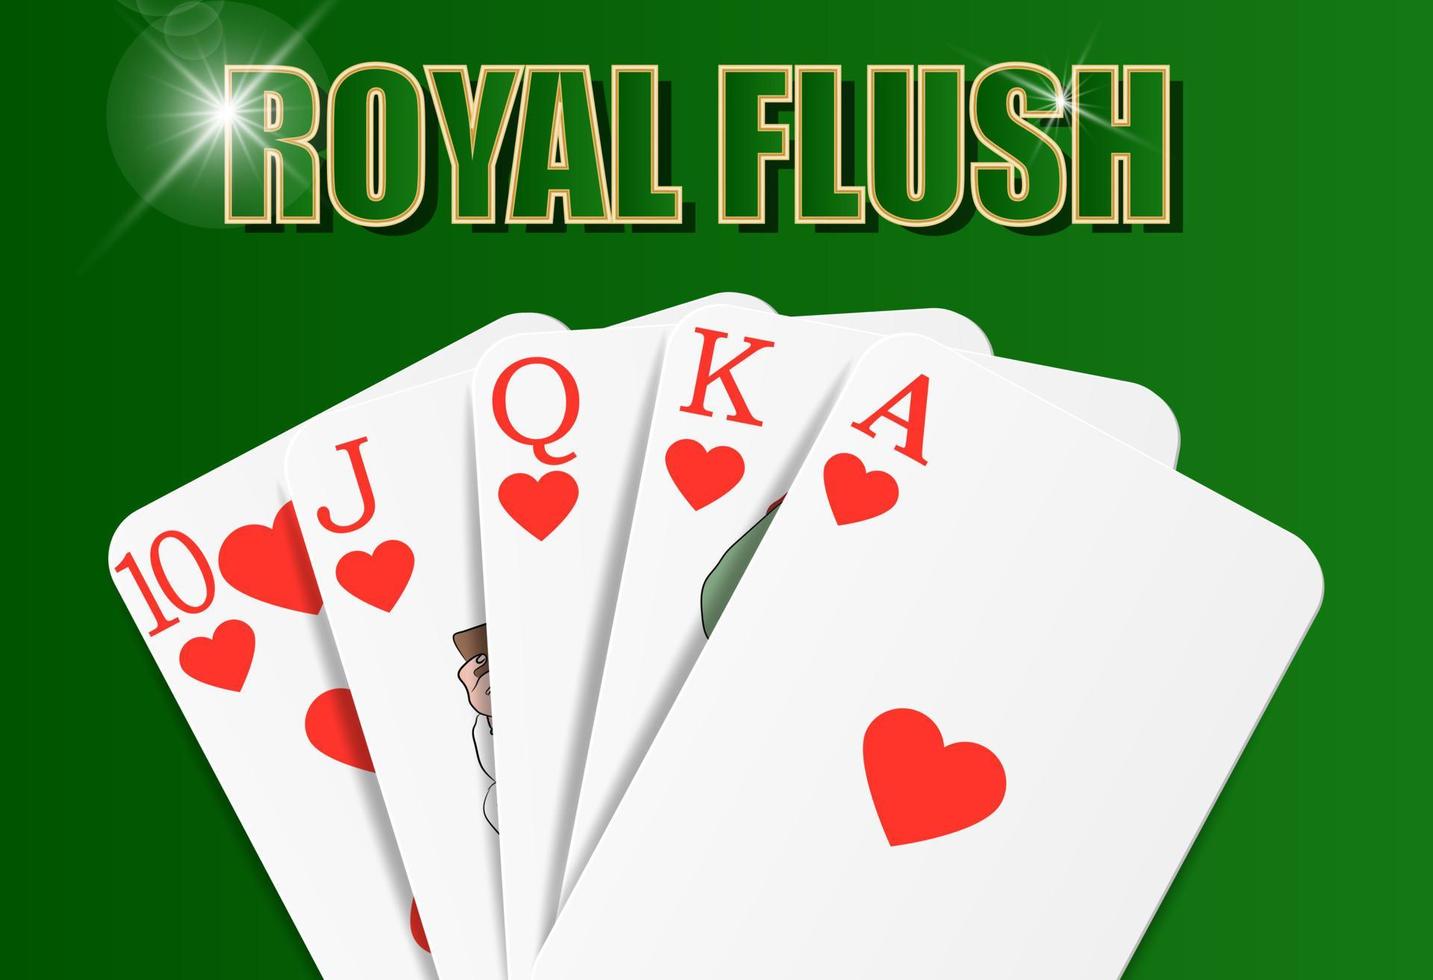 Heart Royal flush vector